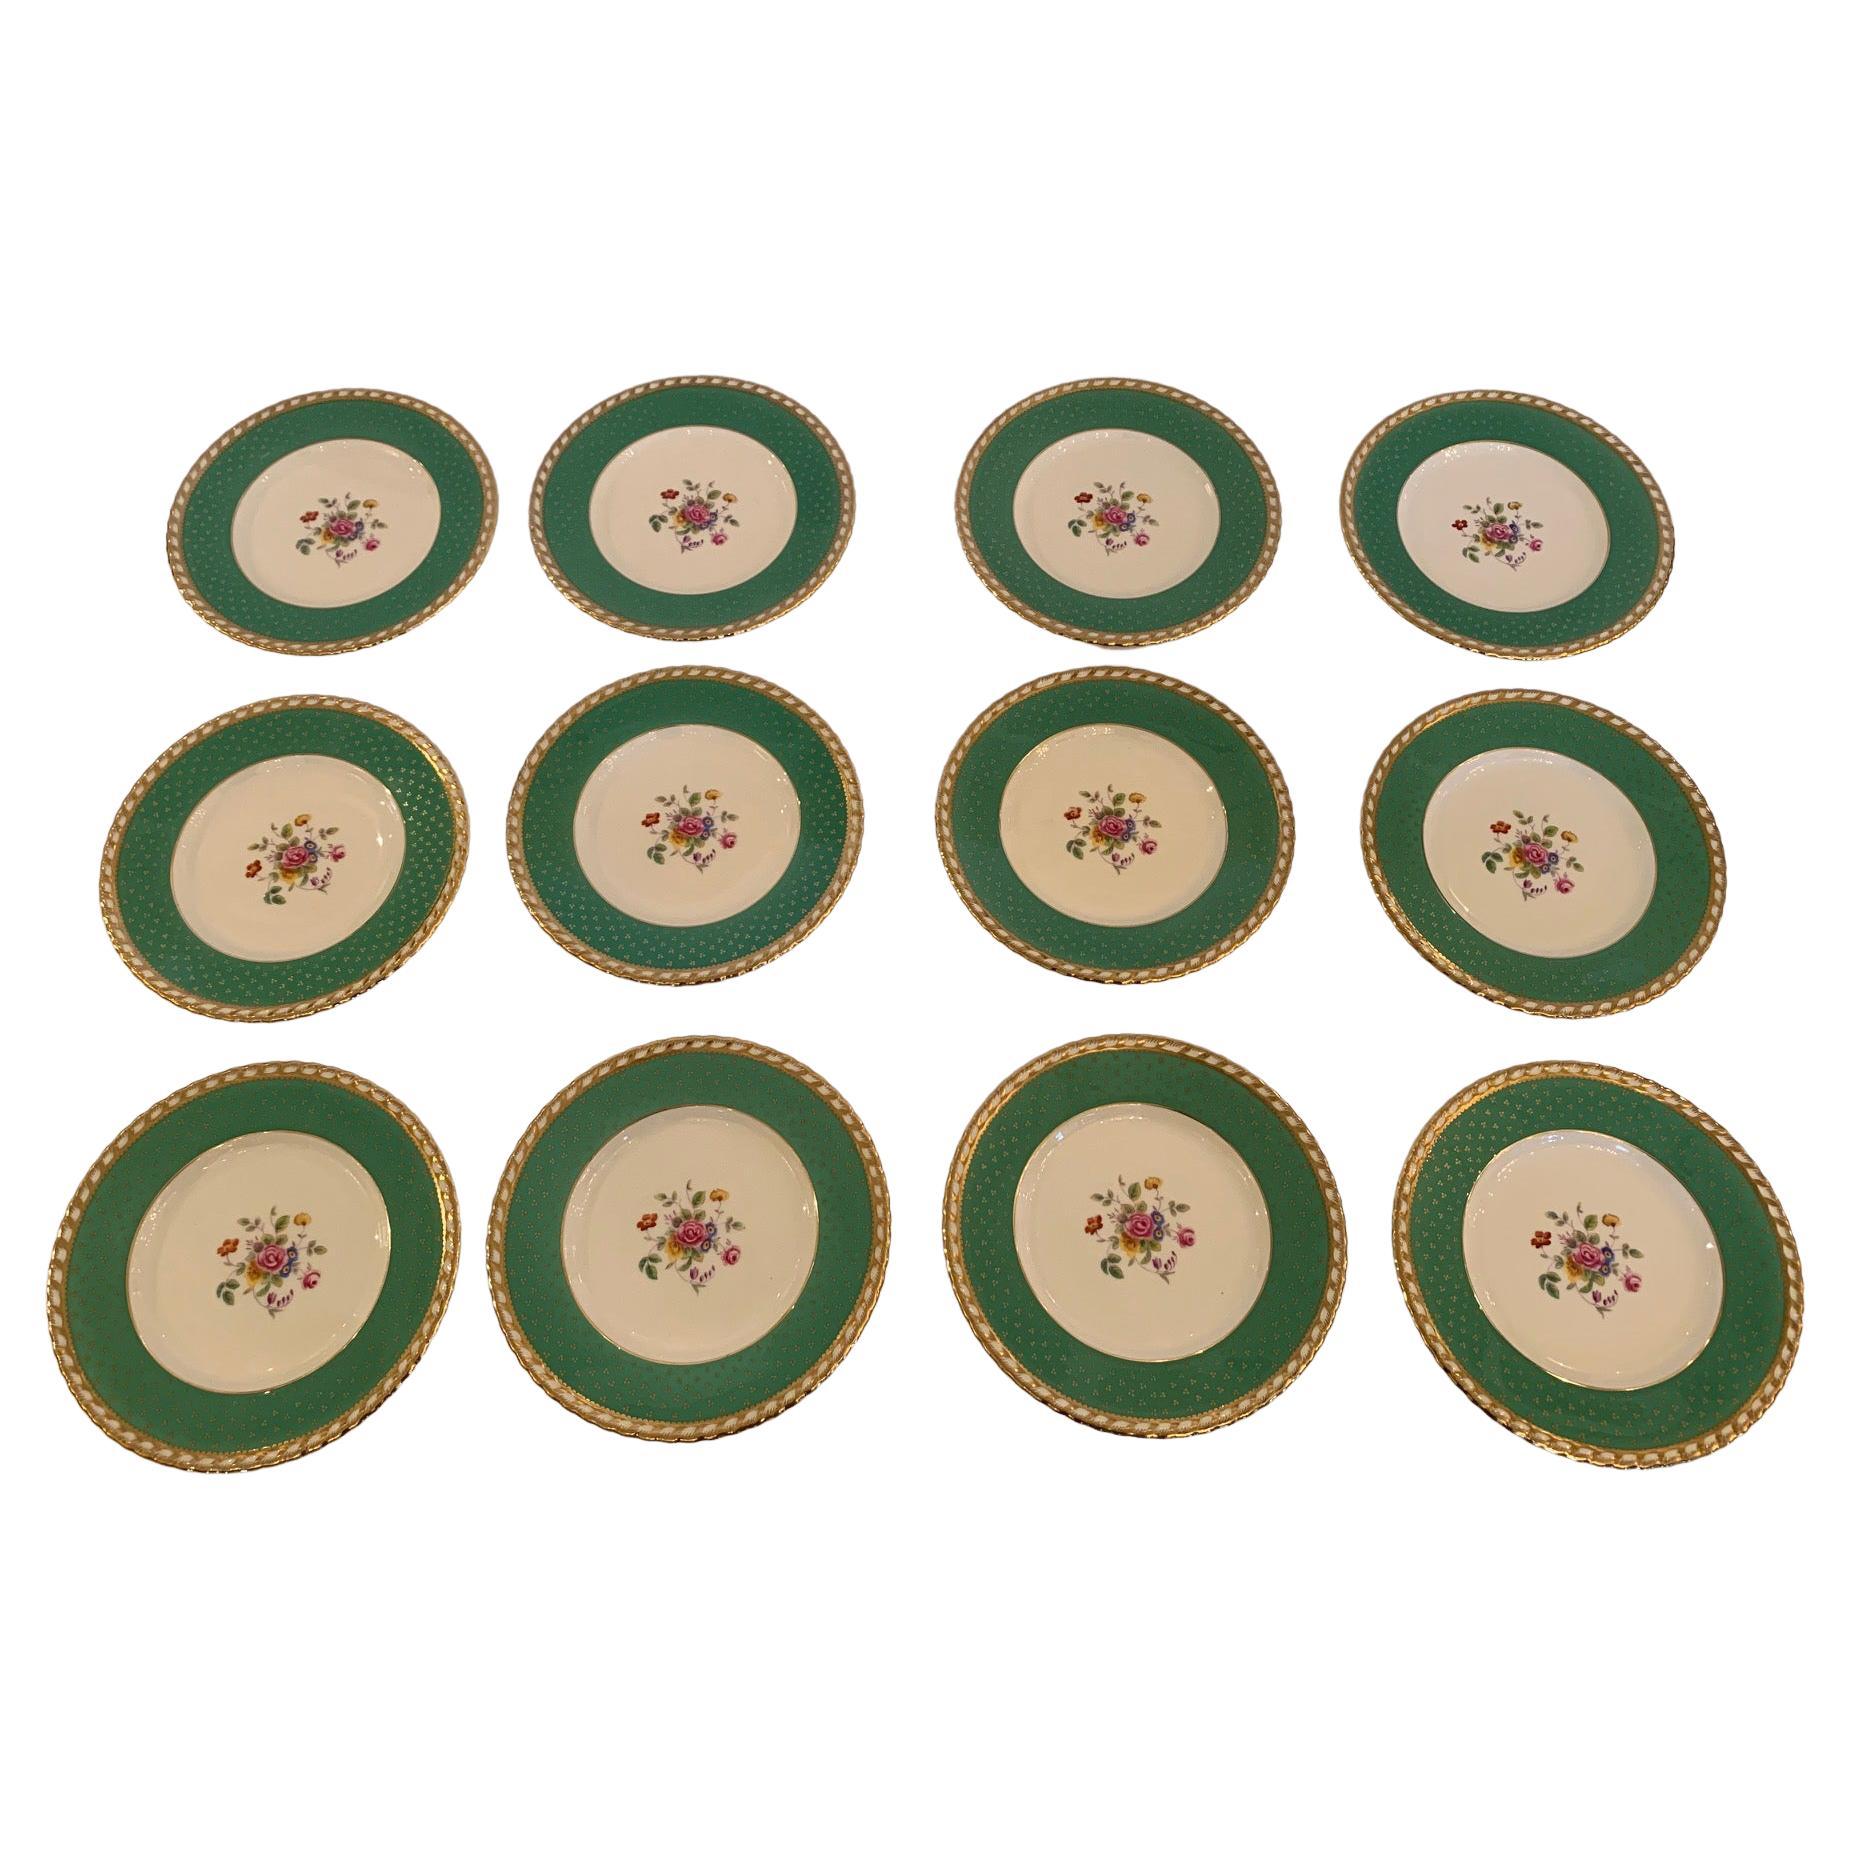 Elegant Set of 12 Tiffany China Dessert or Luncheon Plates